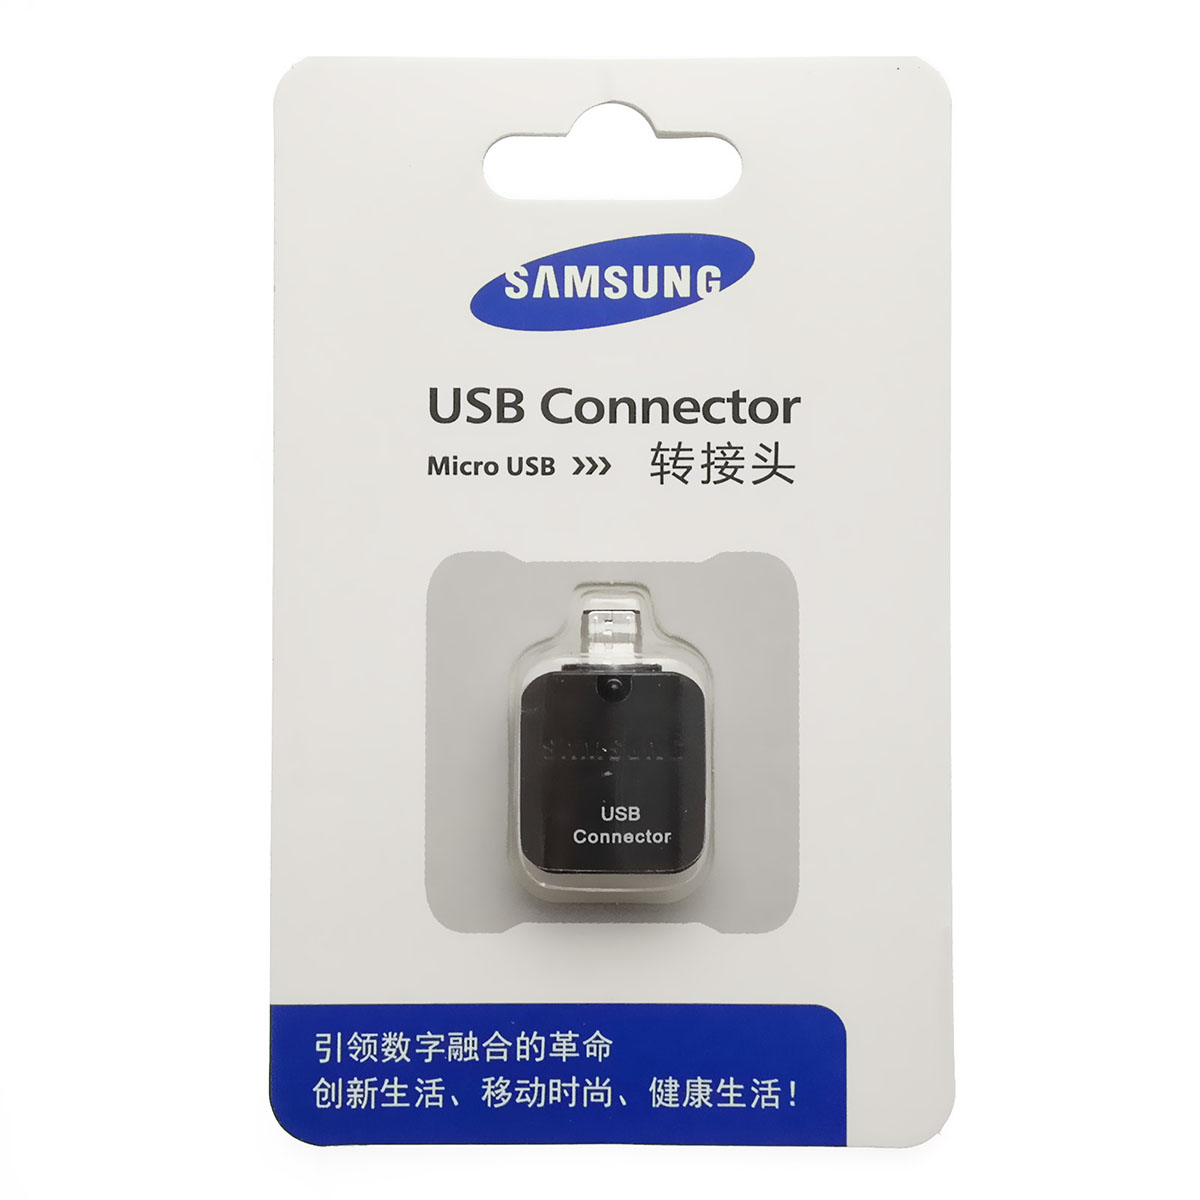 OTG переходник / адаптер / конвертер на Micro USB для устройств SAMSUNG (USB Connector), цвет черный.